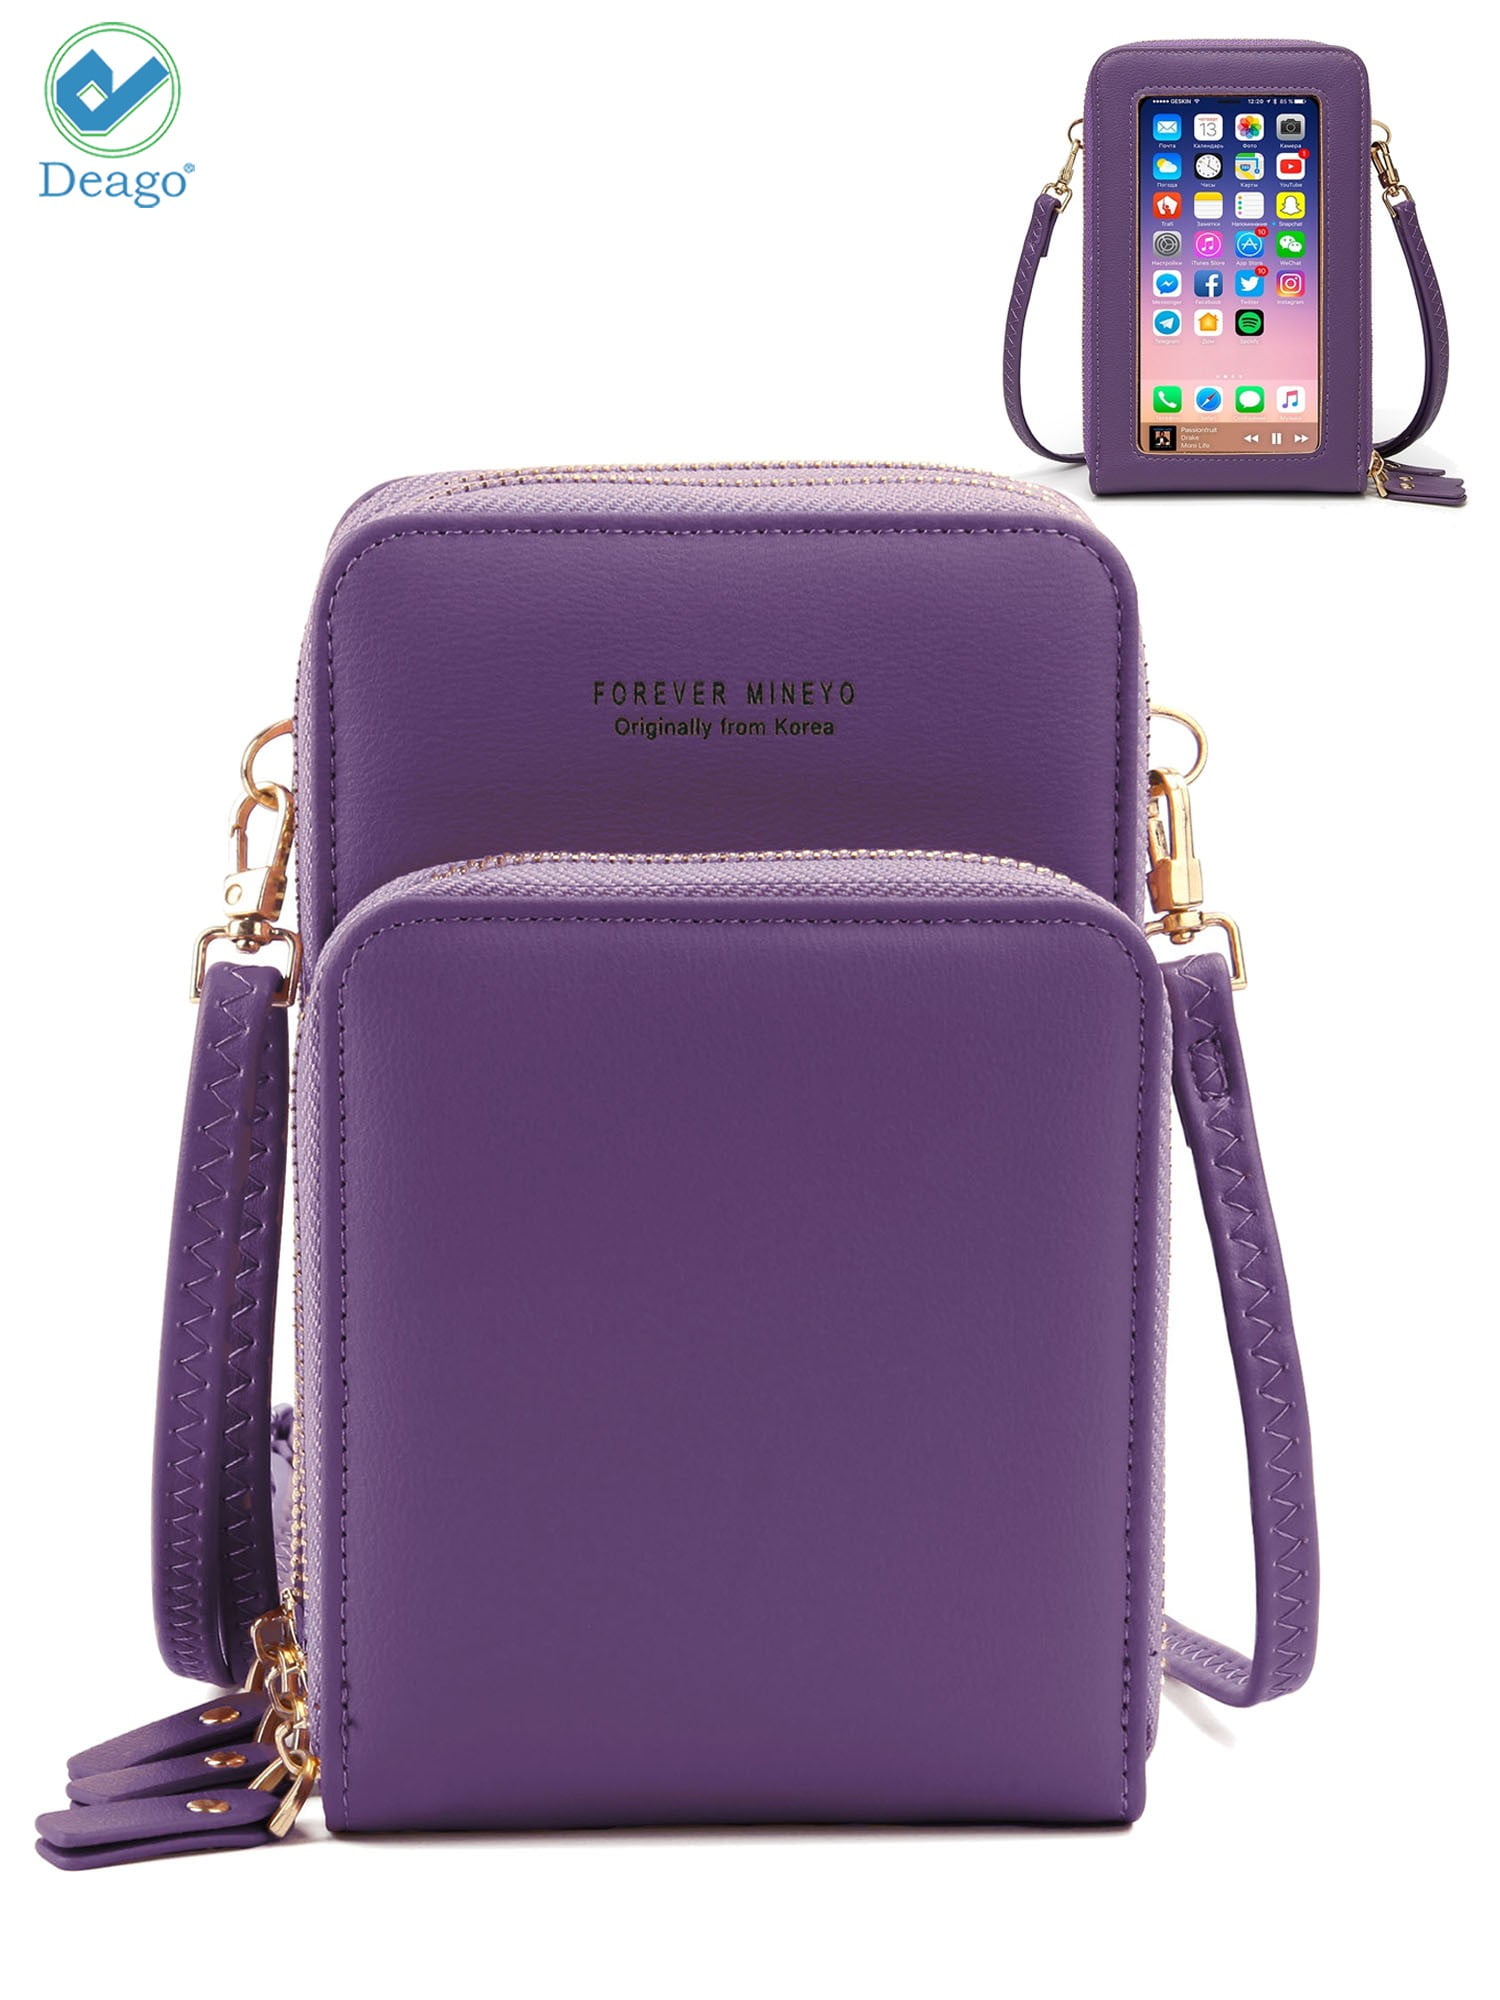 Deago Women Crossbody Cellphone Purse Touch Screen Bag RFID Blocking Wallet Handbag with Shoulder Strap Purple 3ceedcb3 4dd8 4b94 b172 5afed1e6f149.d40f50095dc5748e15b3970f34cecc0a